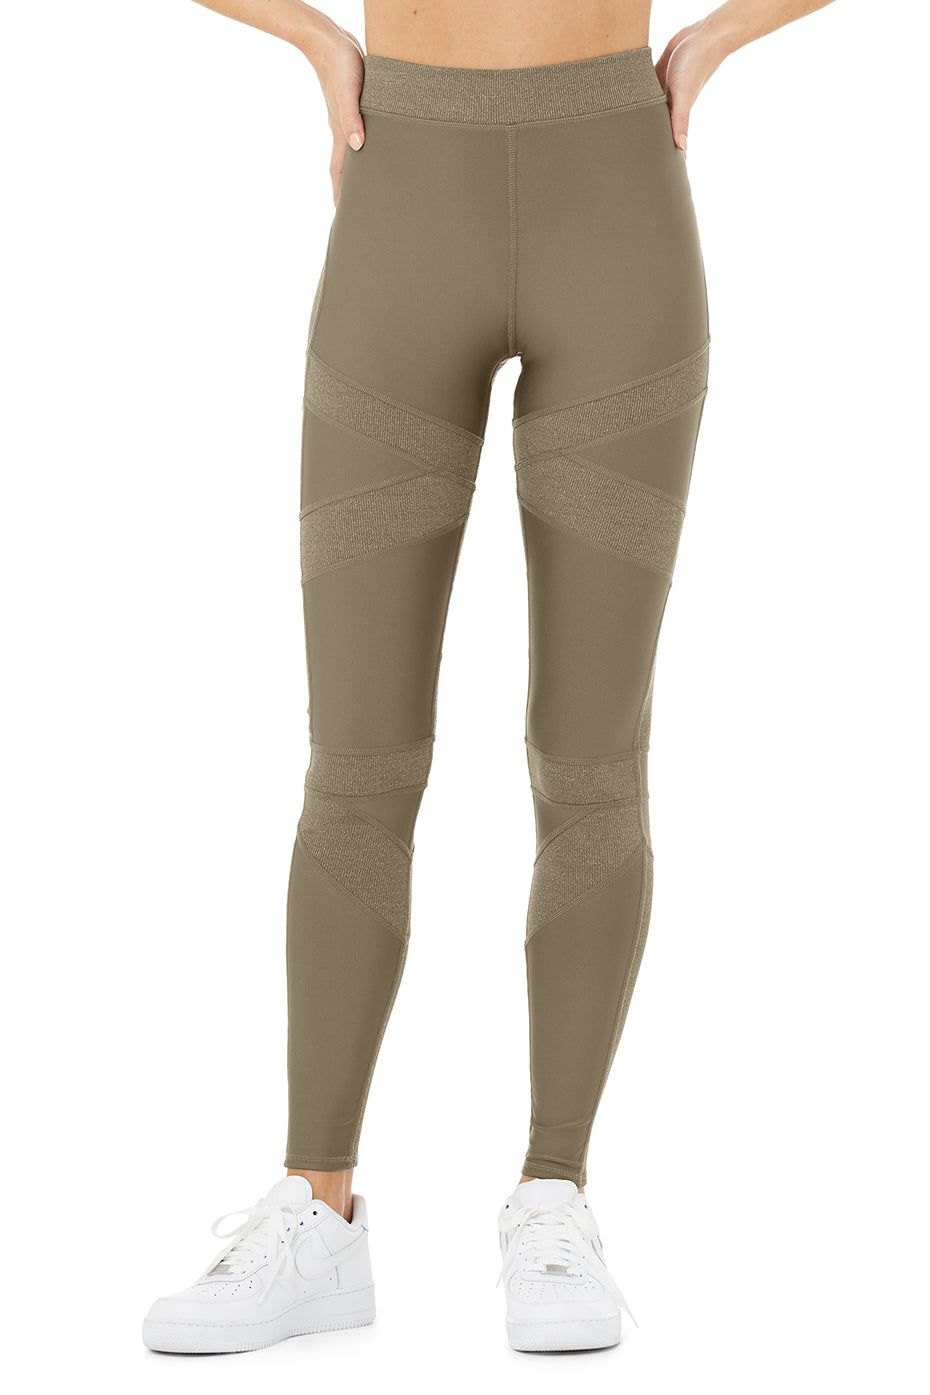 Alo Yoga's Moto leggings are on sale for 30% off